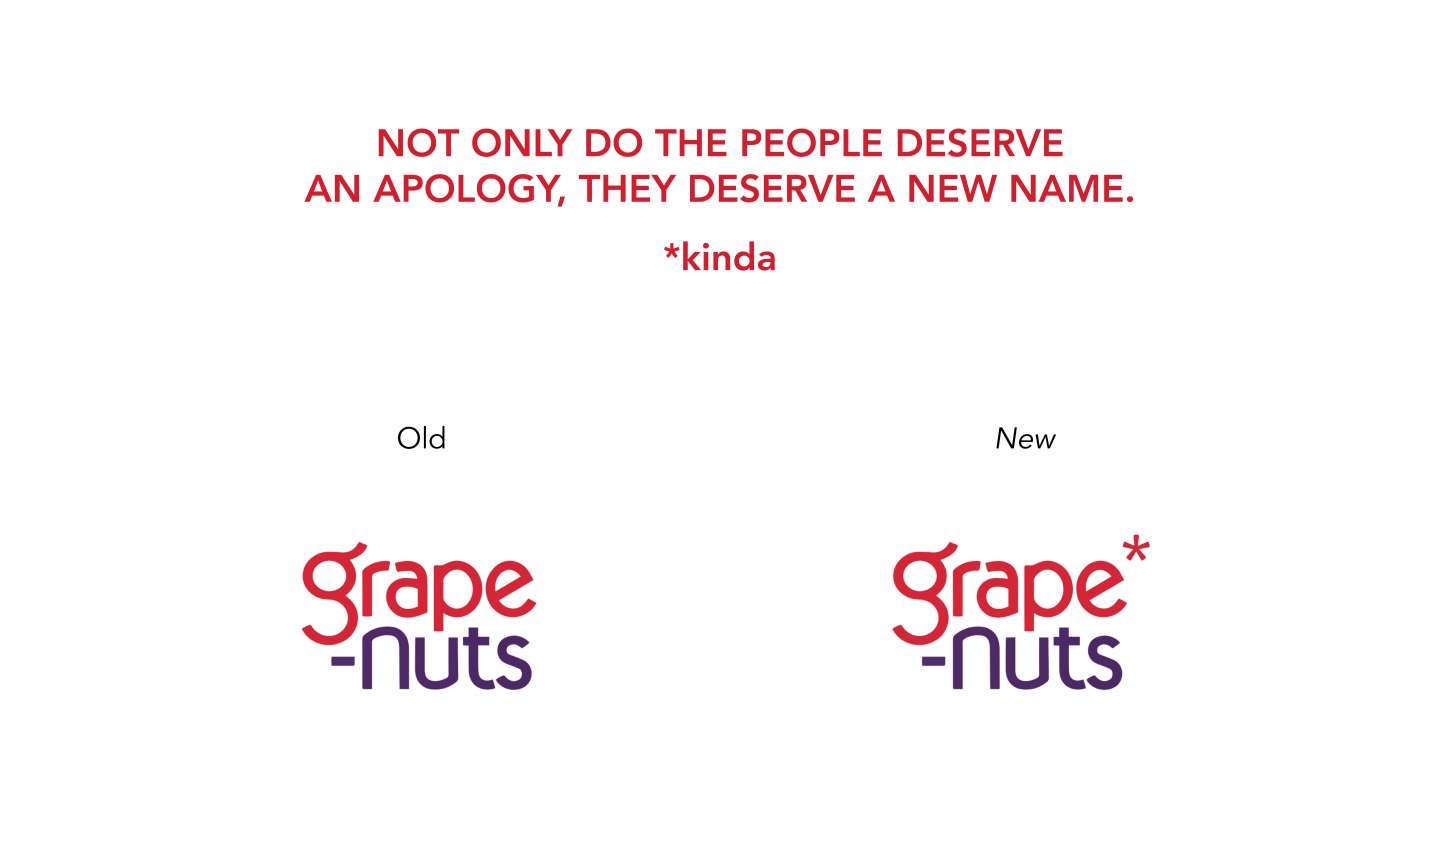 Grape-Nuts*